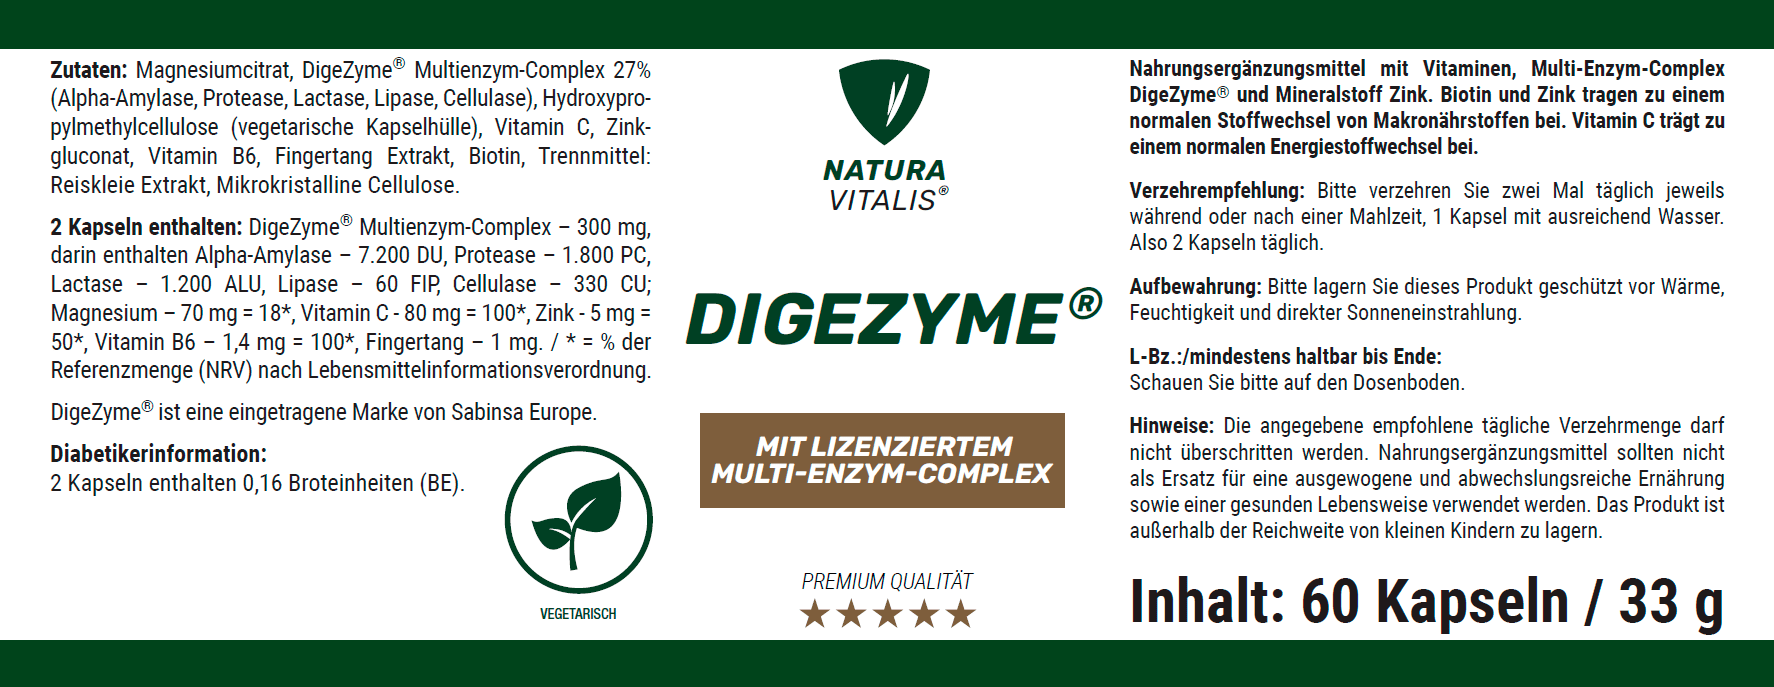 DIGEZYME - Multi-Enzym-Komplex - 60 Kapseln